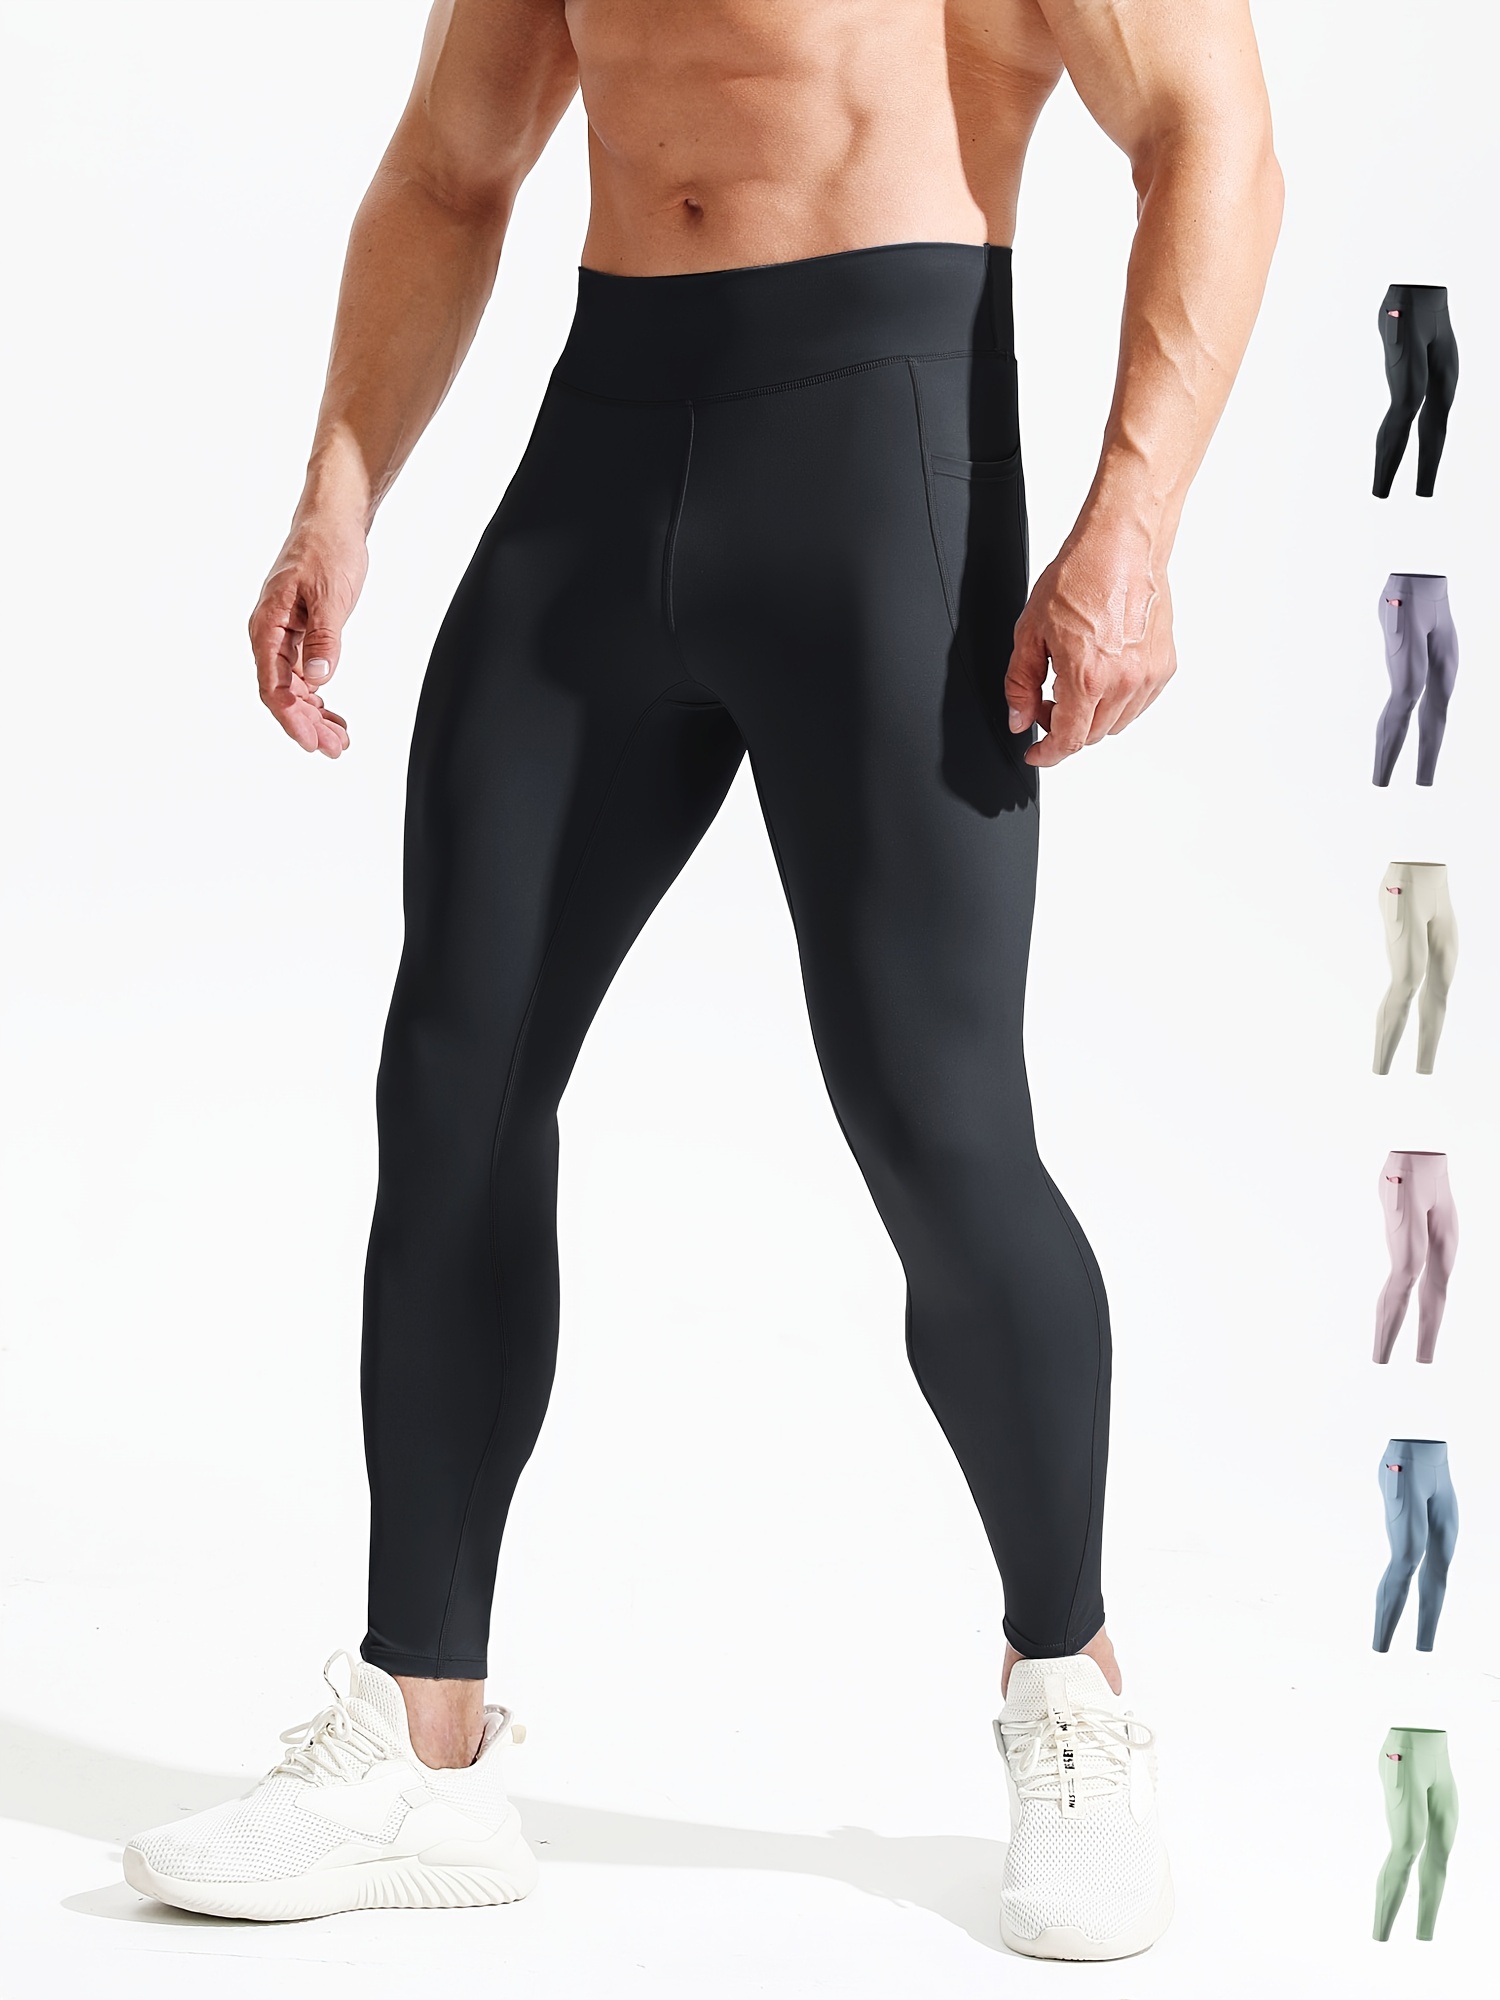 Mallas ajustadas de compresión para hombre, para correr, gimnasio,  ejercicio, deportes, Fitness, pan Zulema leggings de fitness para hombre